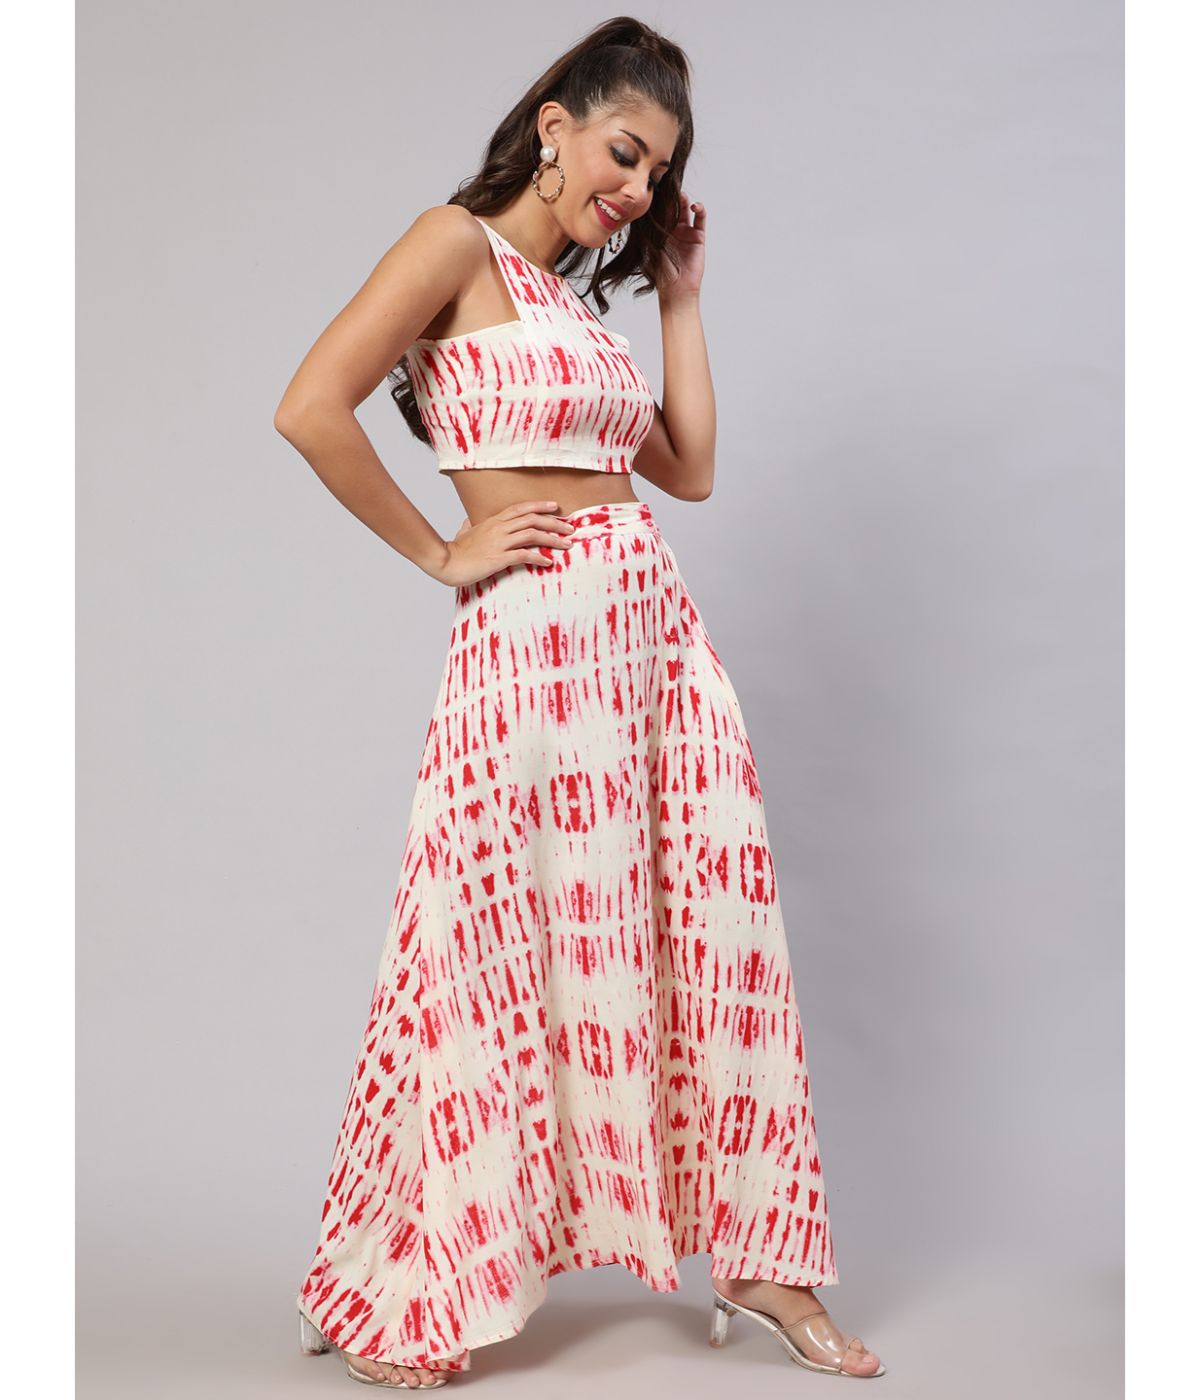 Daevish New Tie-Dye Printed Top Skirt Co Ord Set for Women & Girls